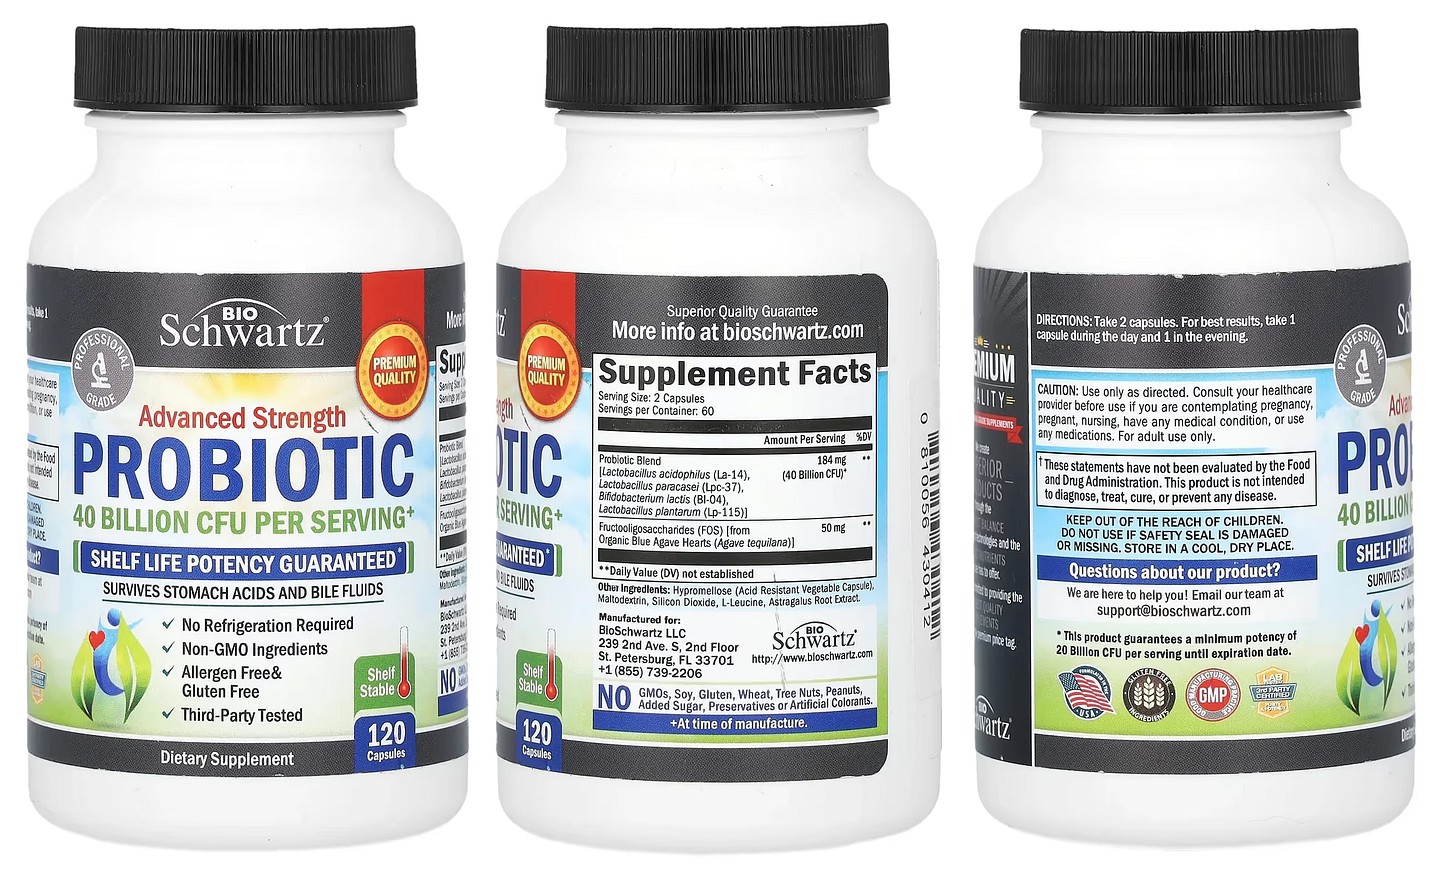 BioSchwartz, Advanced Strength Probiotic packaging